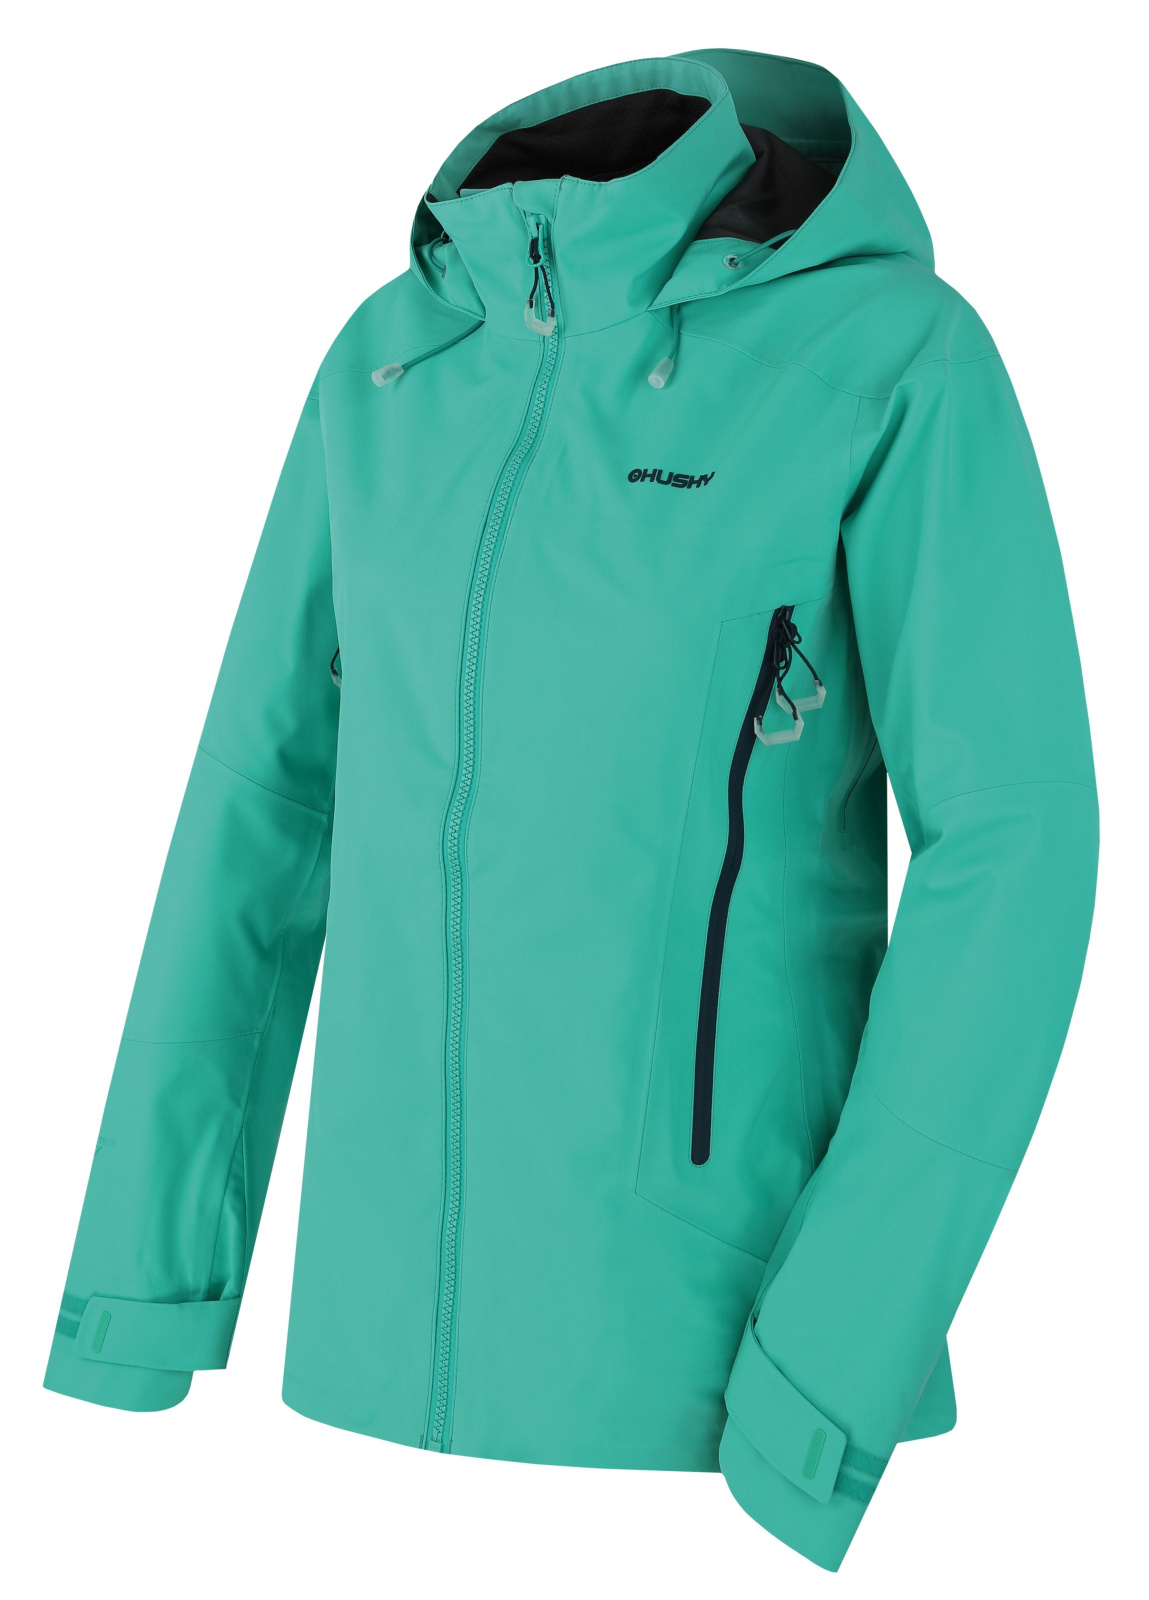 Husky Dámská outdoor bunda Nakron L turquoise Velikost: XS dámská bunda